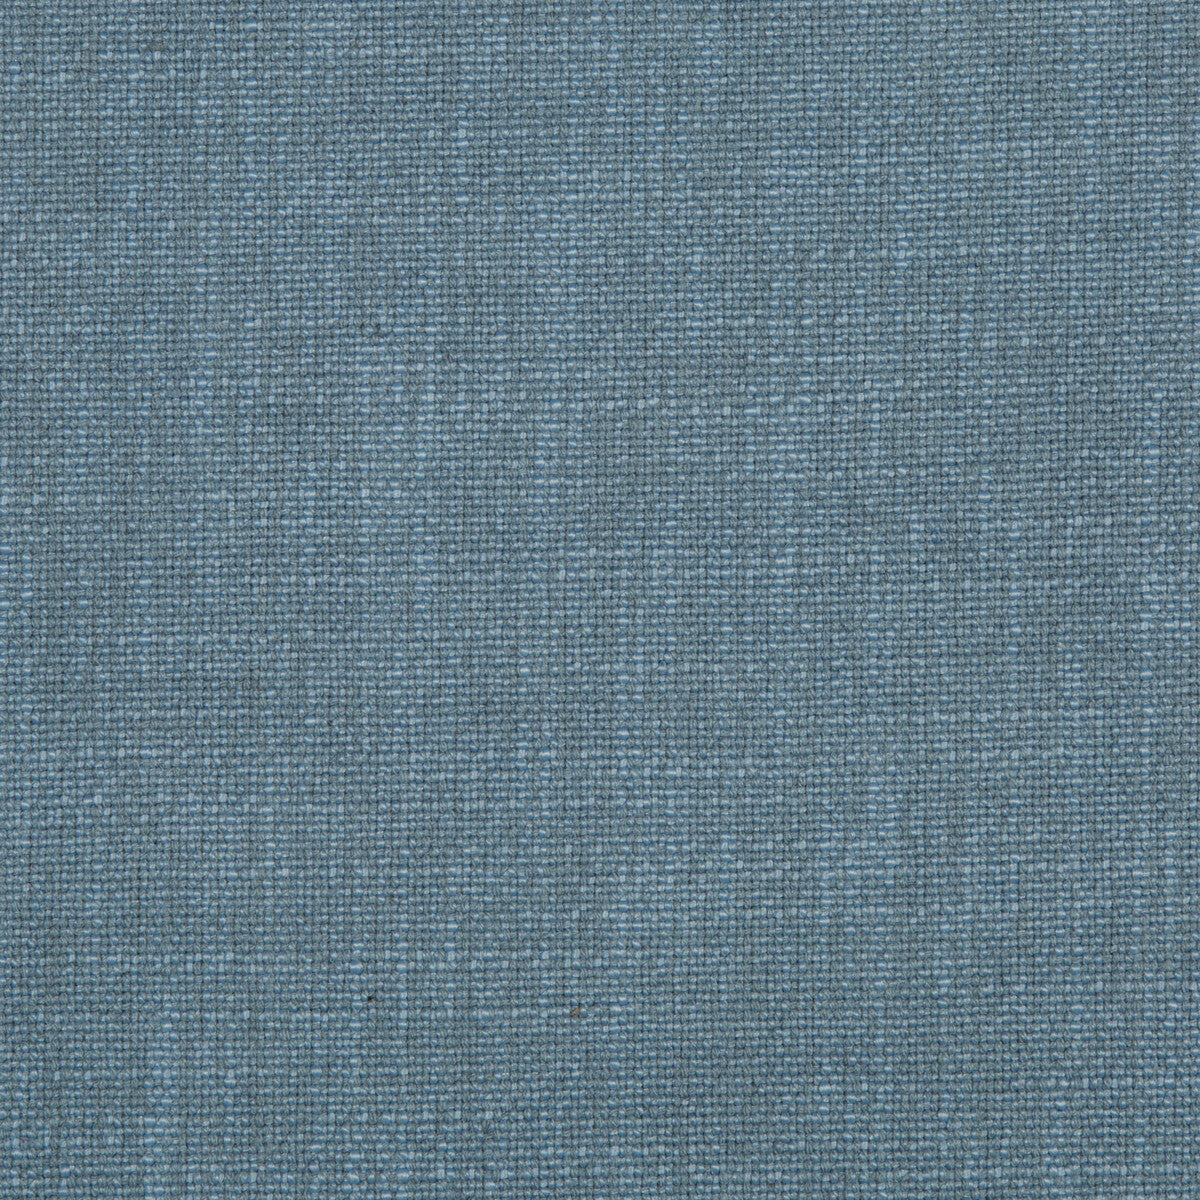 Kravet Smart fabric in 35226-5 color - pattern 35226.5.0 - by Kravet Smart in the Performance Kravetarmor collection